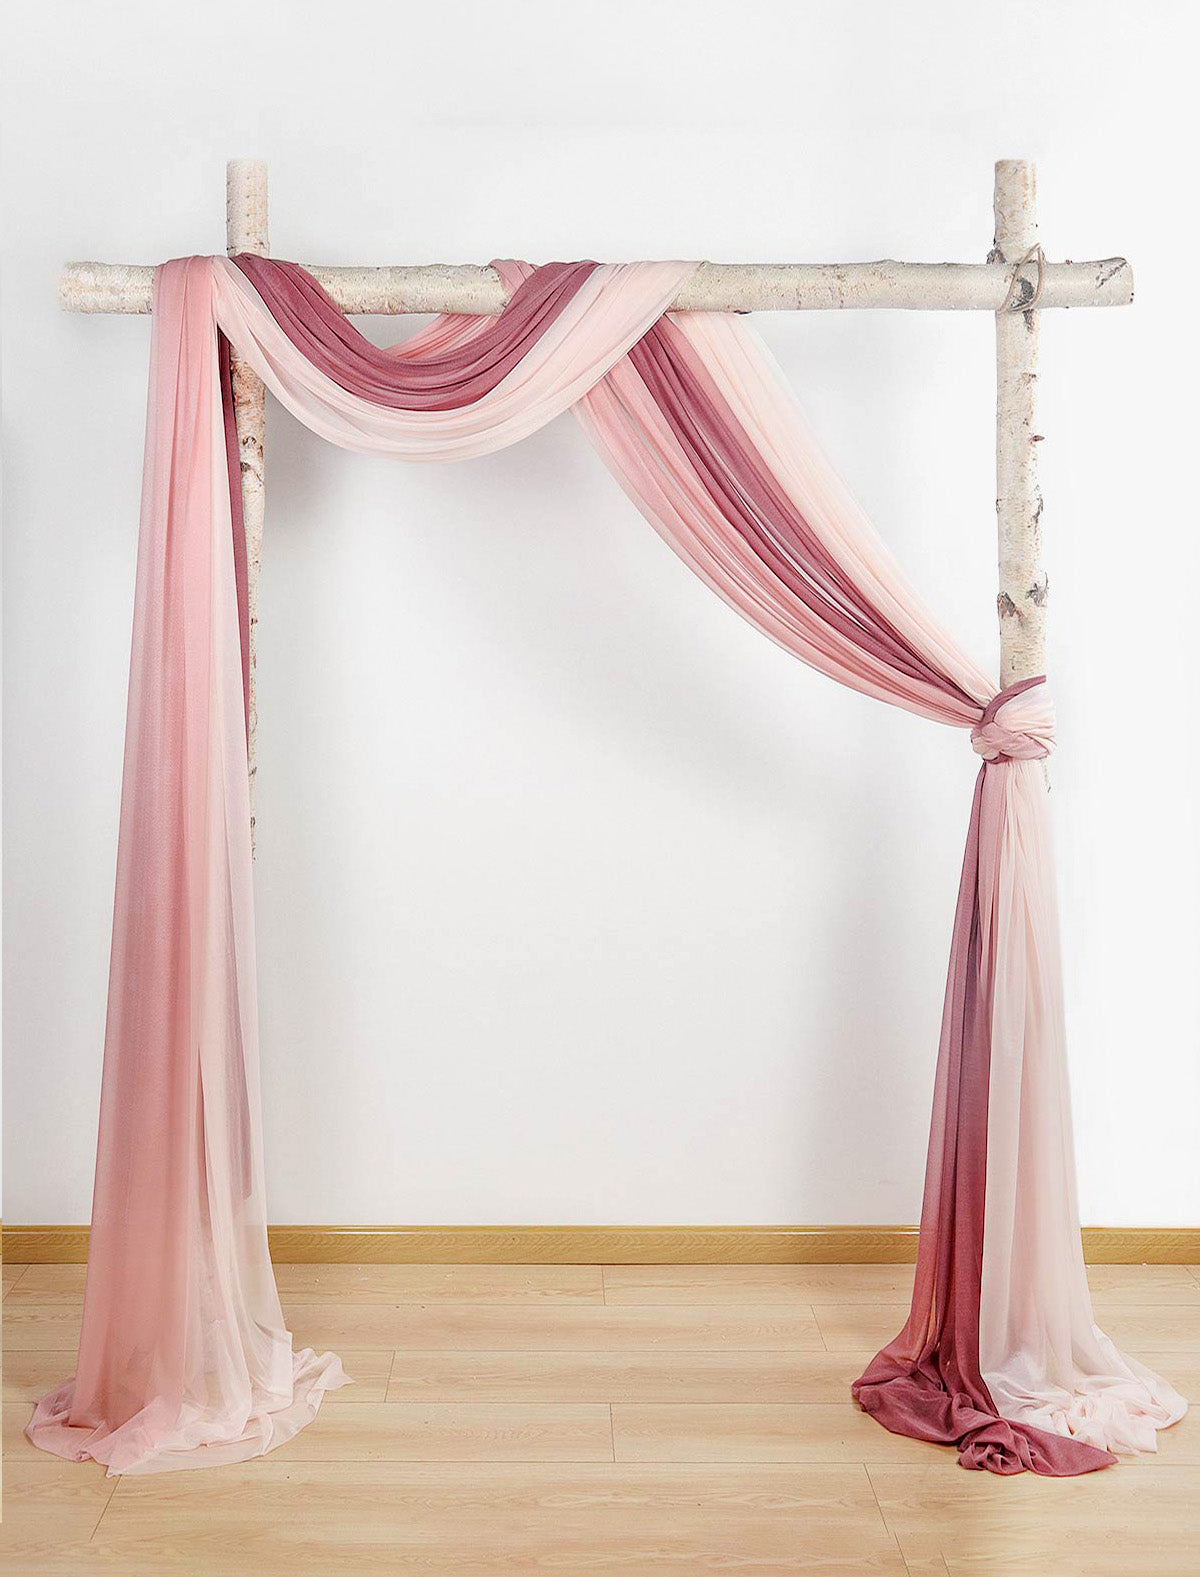 3 Pcs Romantic Wedding Arch Draping 29"w x 19.7ft - Dusty Pink & Mauve & Blush Pink